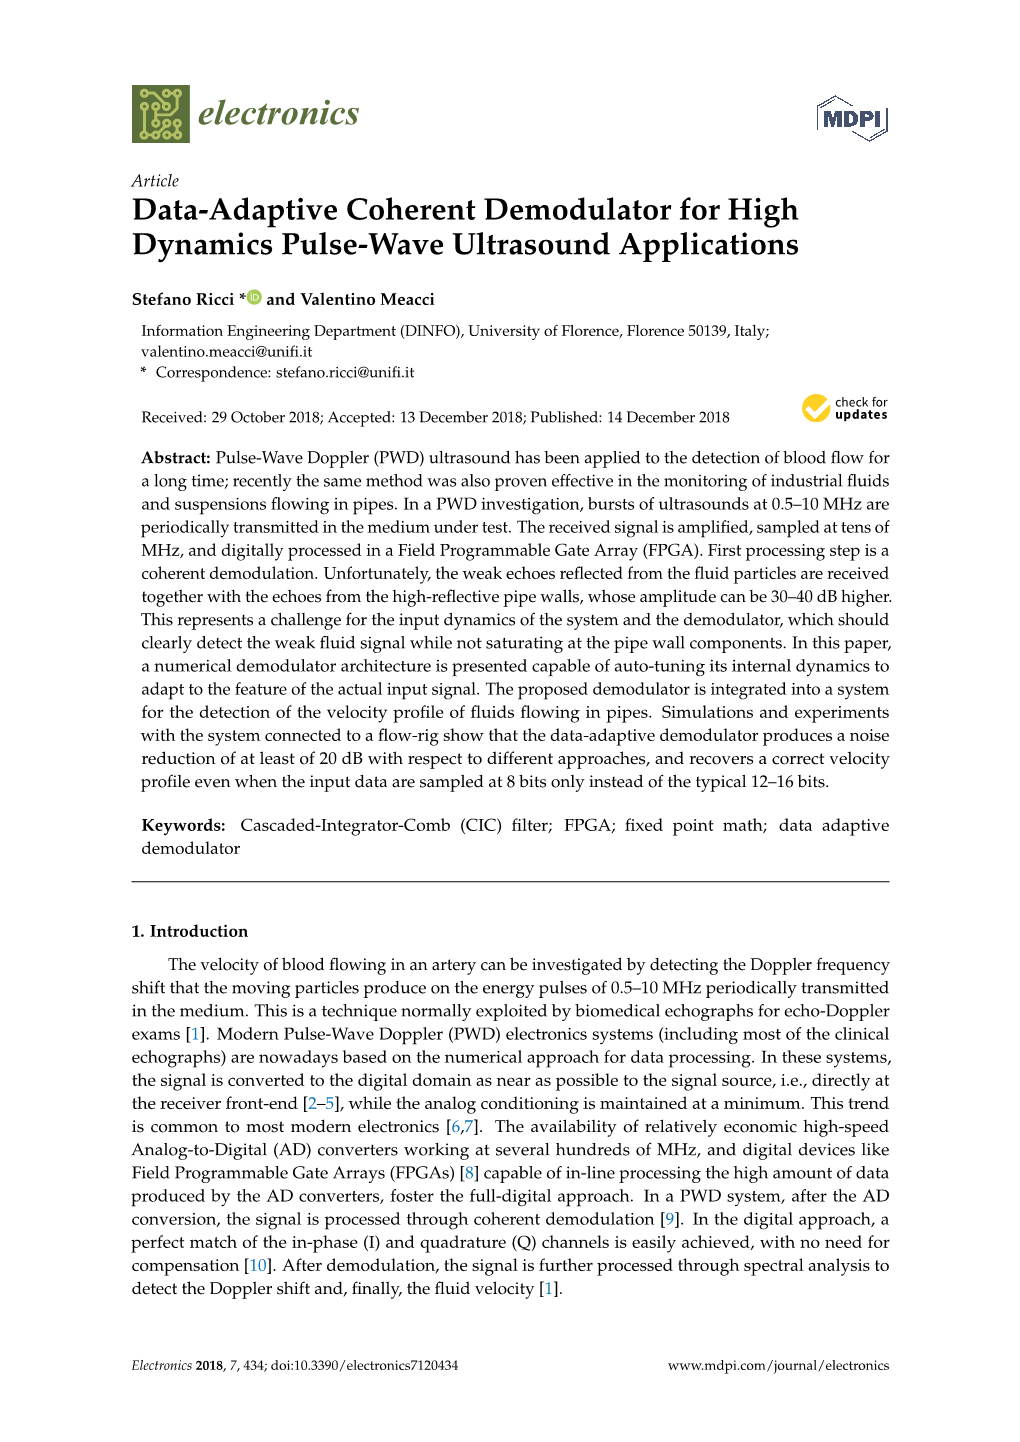 Data-Adaptive Coherent Demodulator for High Dynamics Pulse-Wave Ultrasound Applications